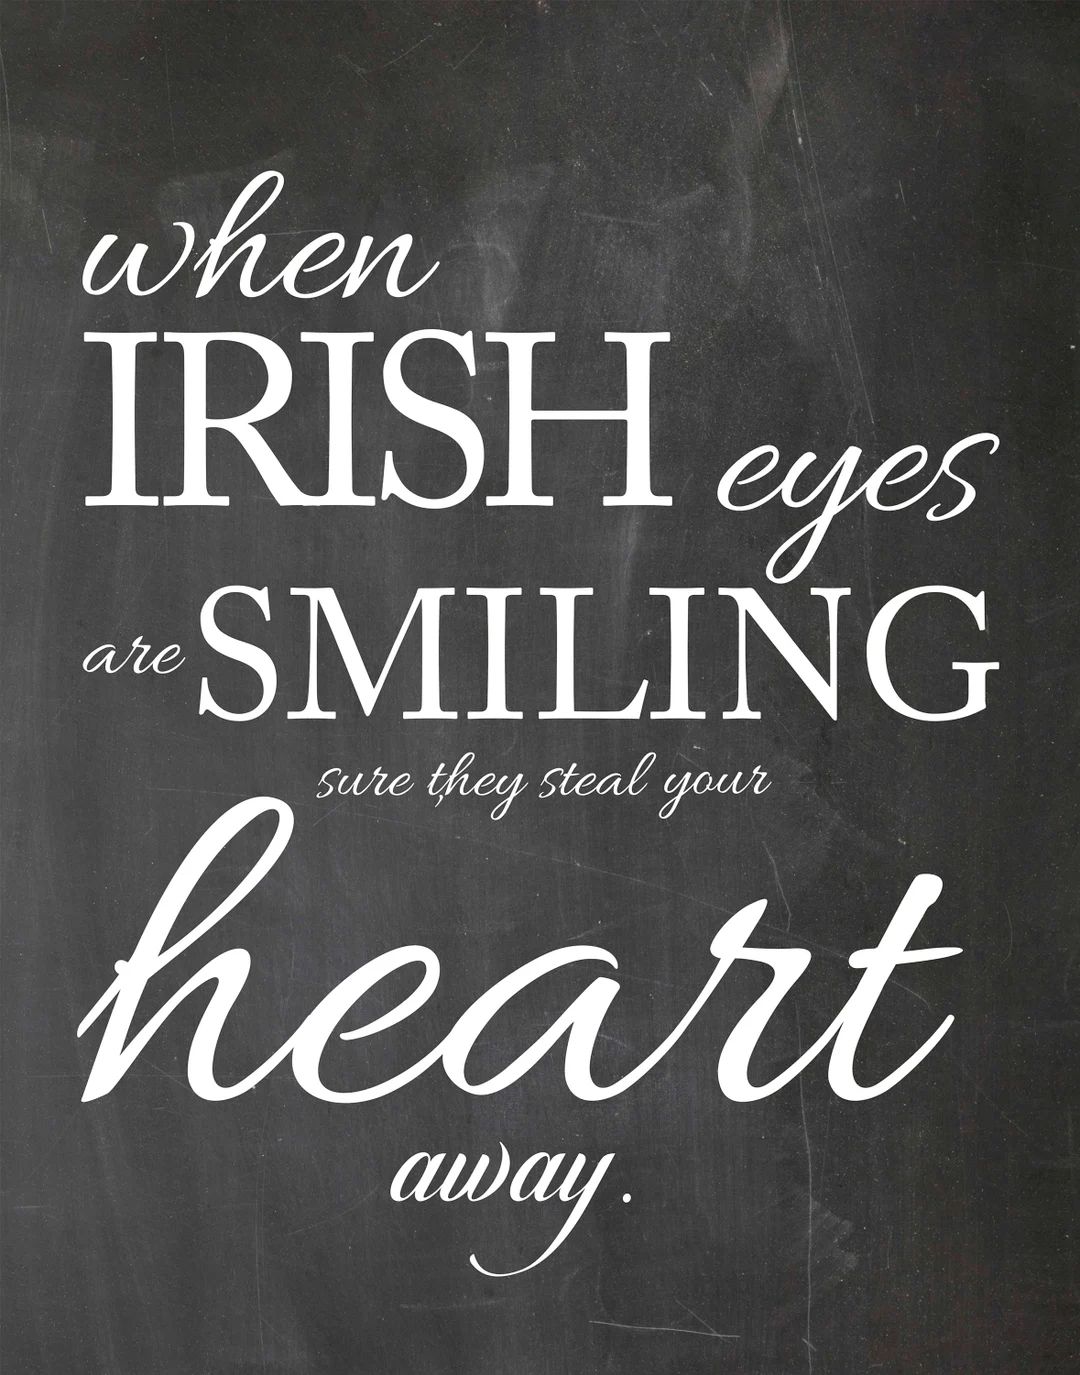 When Irish Eyes Are Smiling Printable - 11 x 14 | Etsy (US)